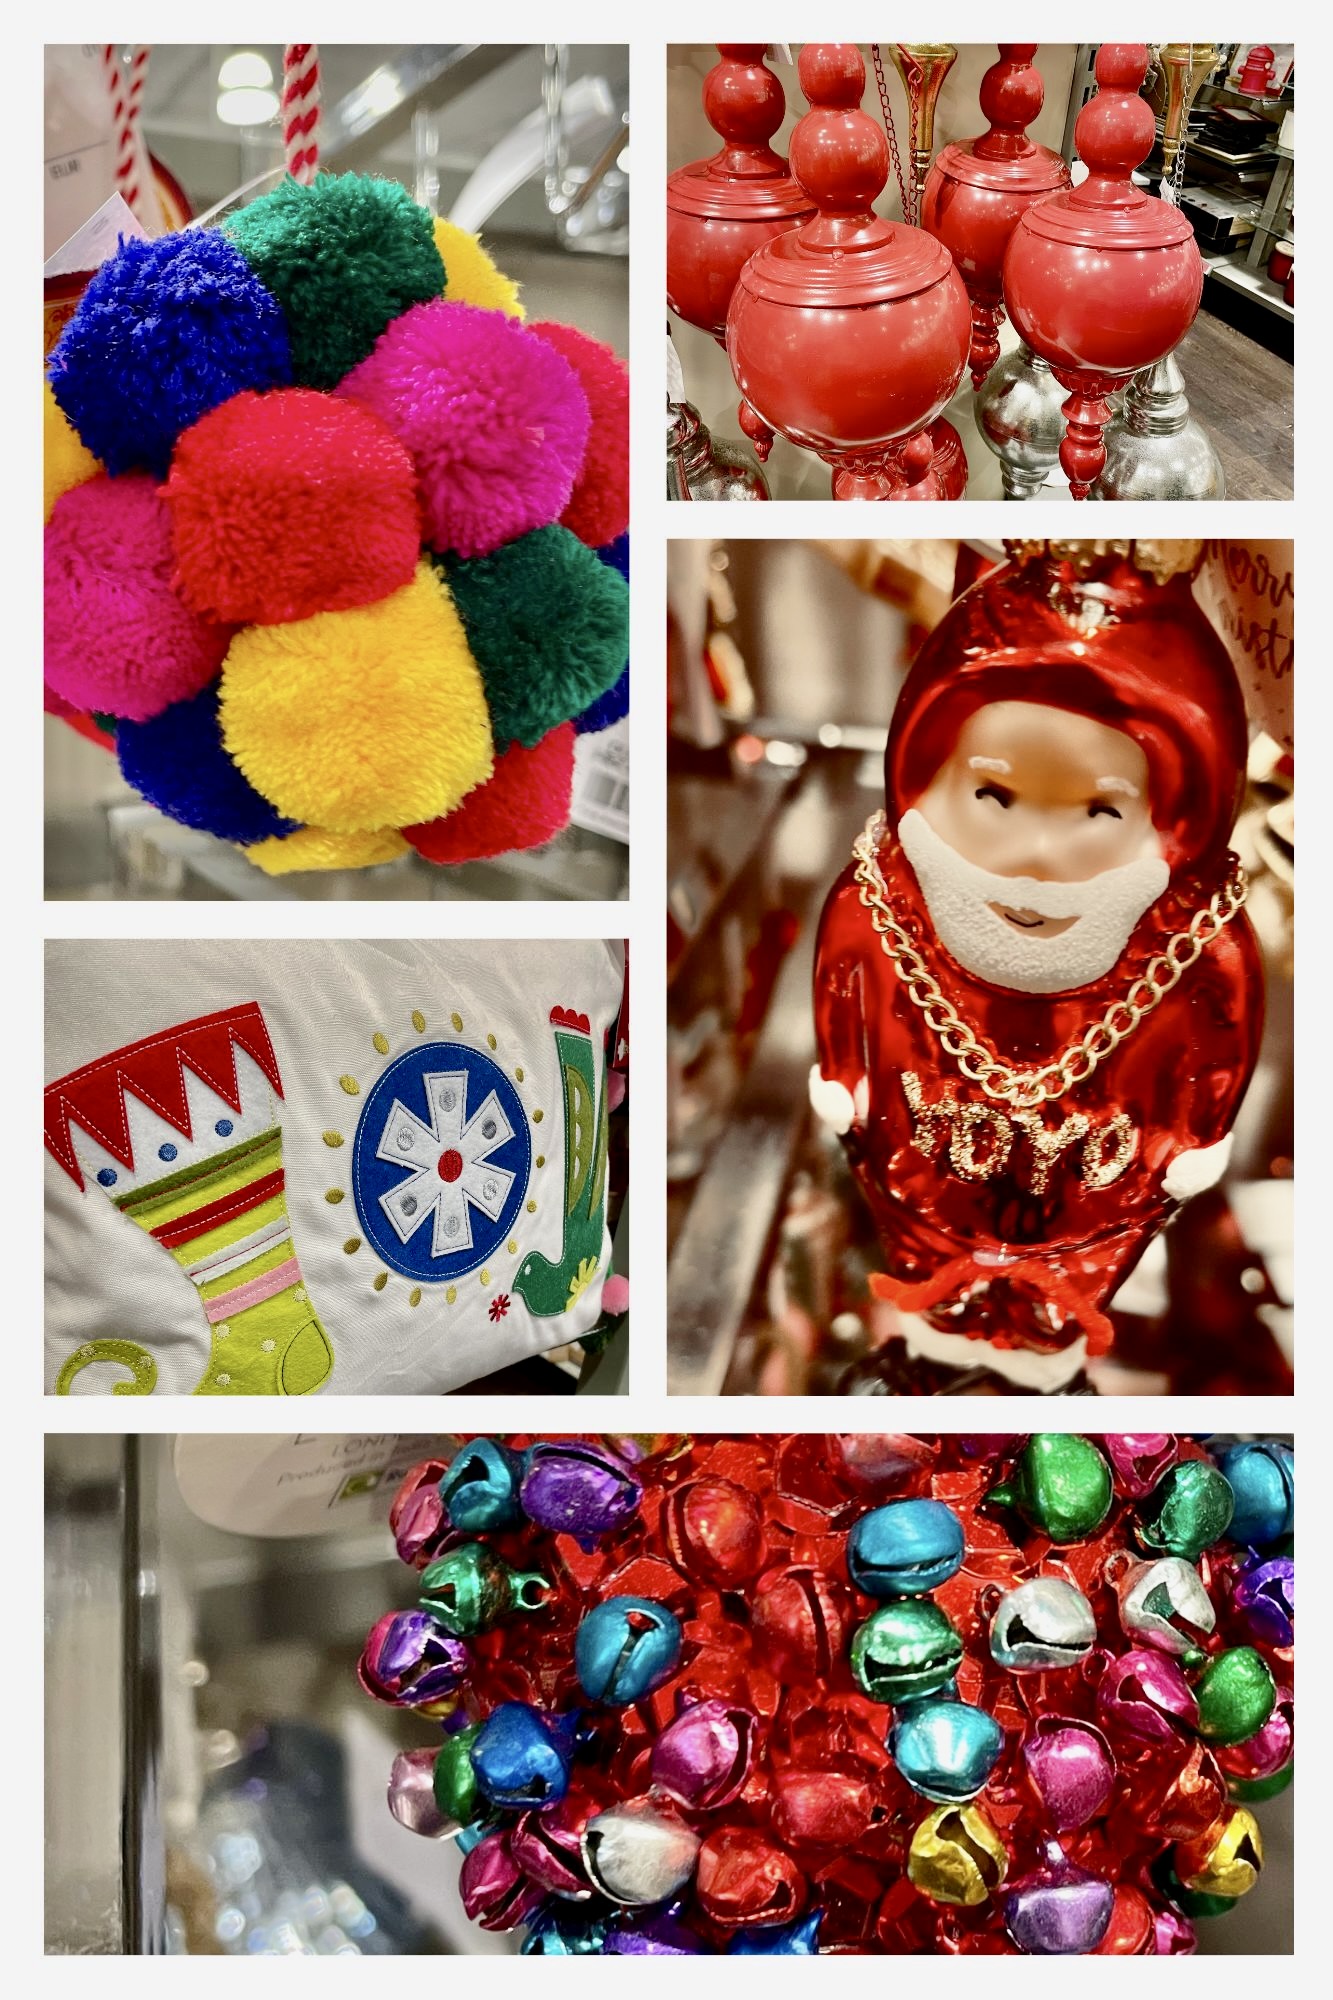 TK Maxx Christmas decorations 